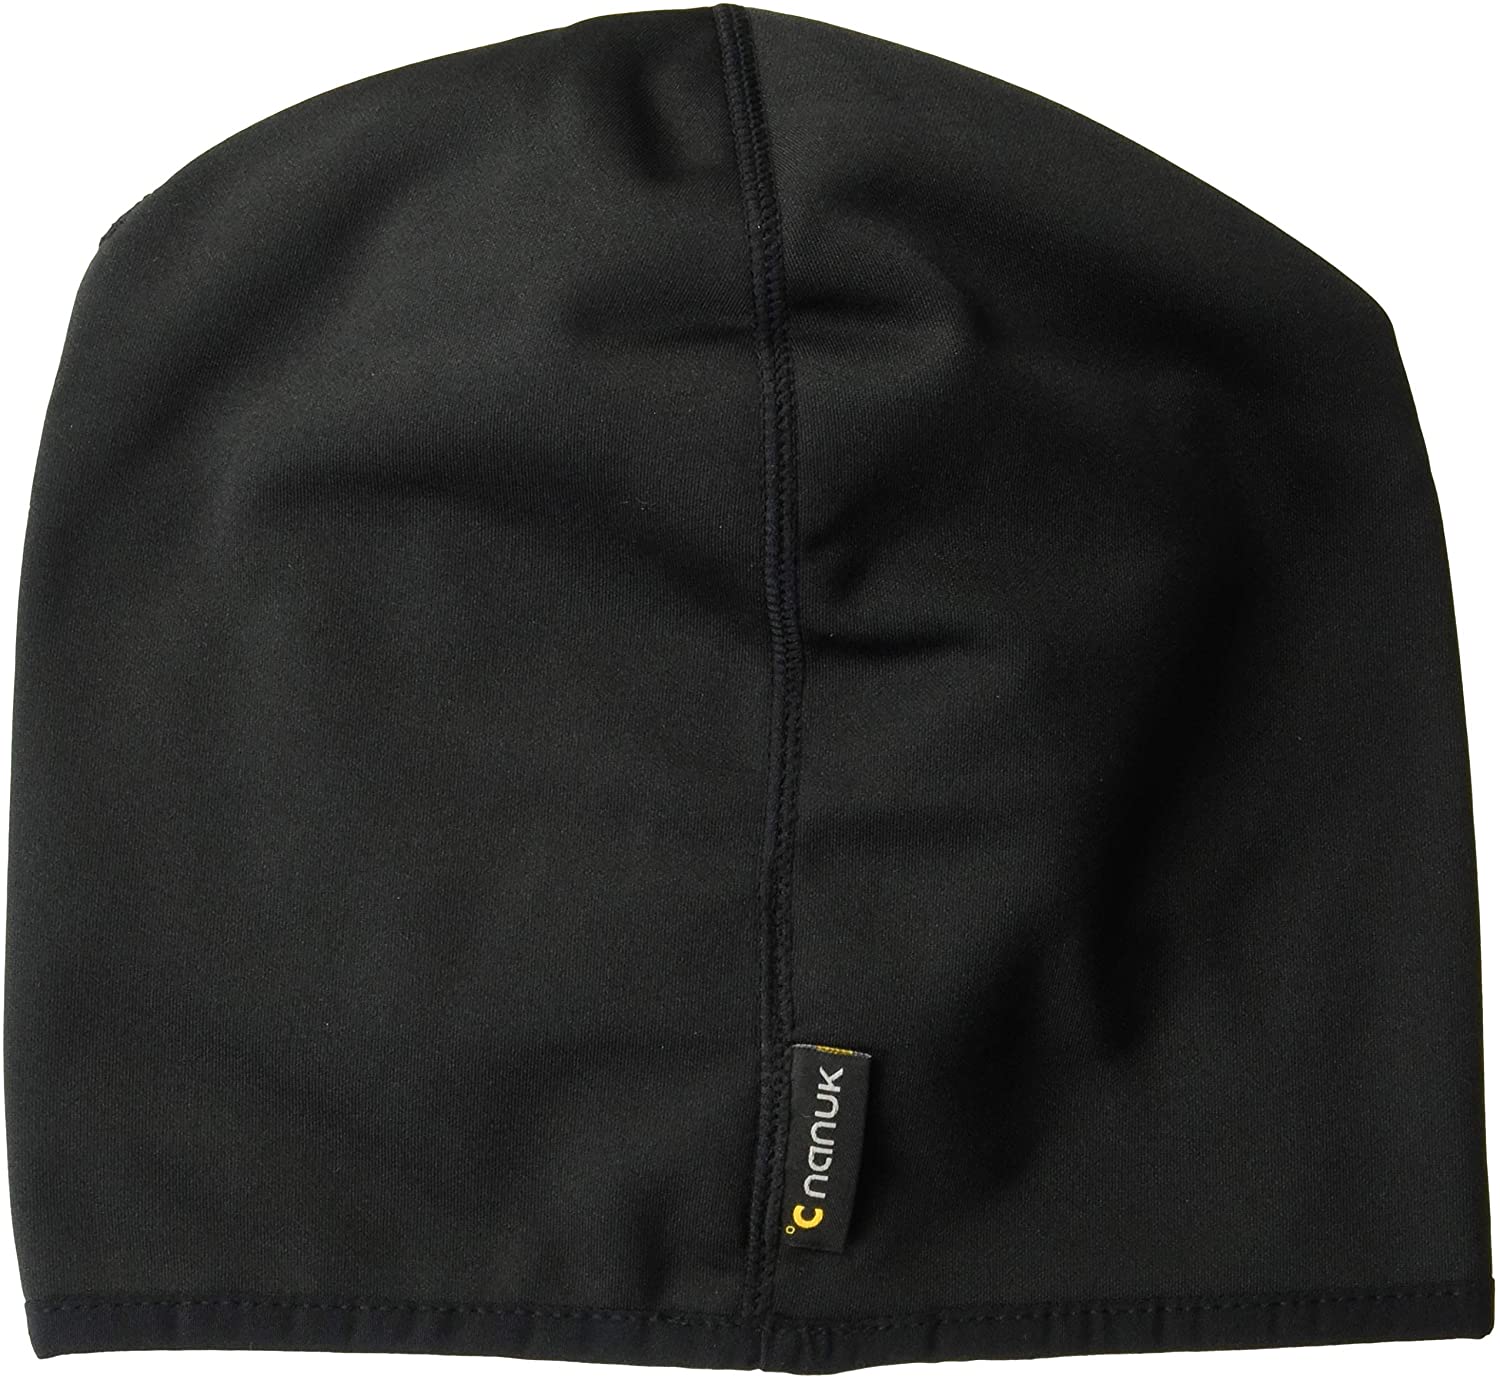 Jack Wolfskin Dynamic Beanie Stretchy Performance Fleece Hat, Black, MediumL 002